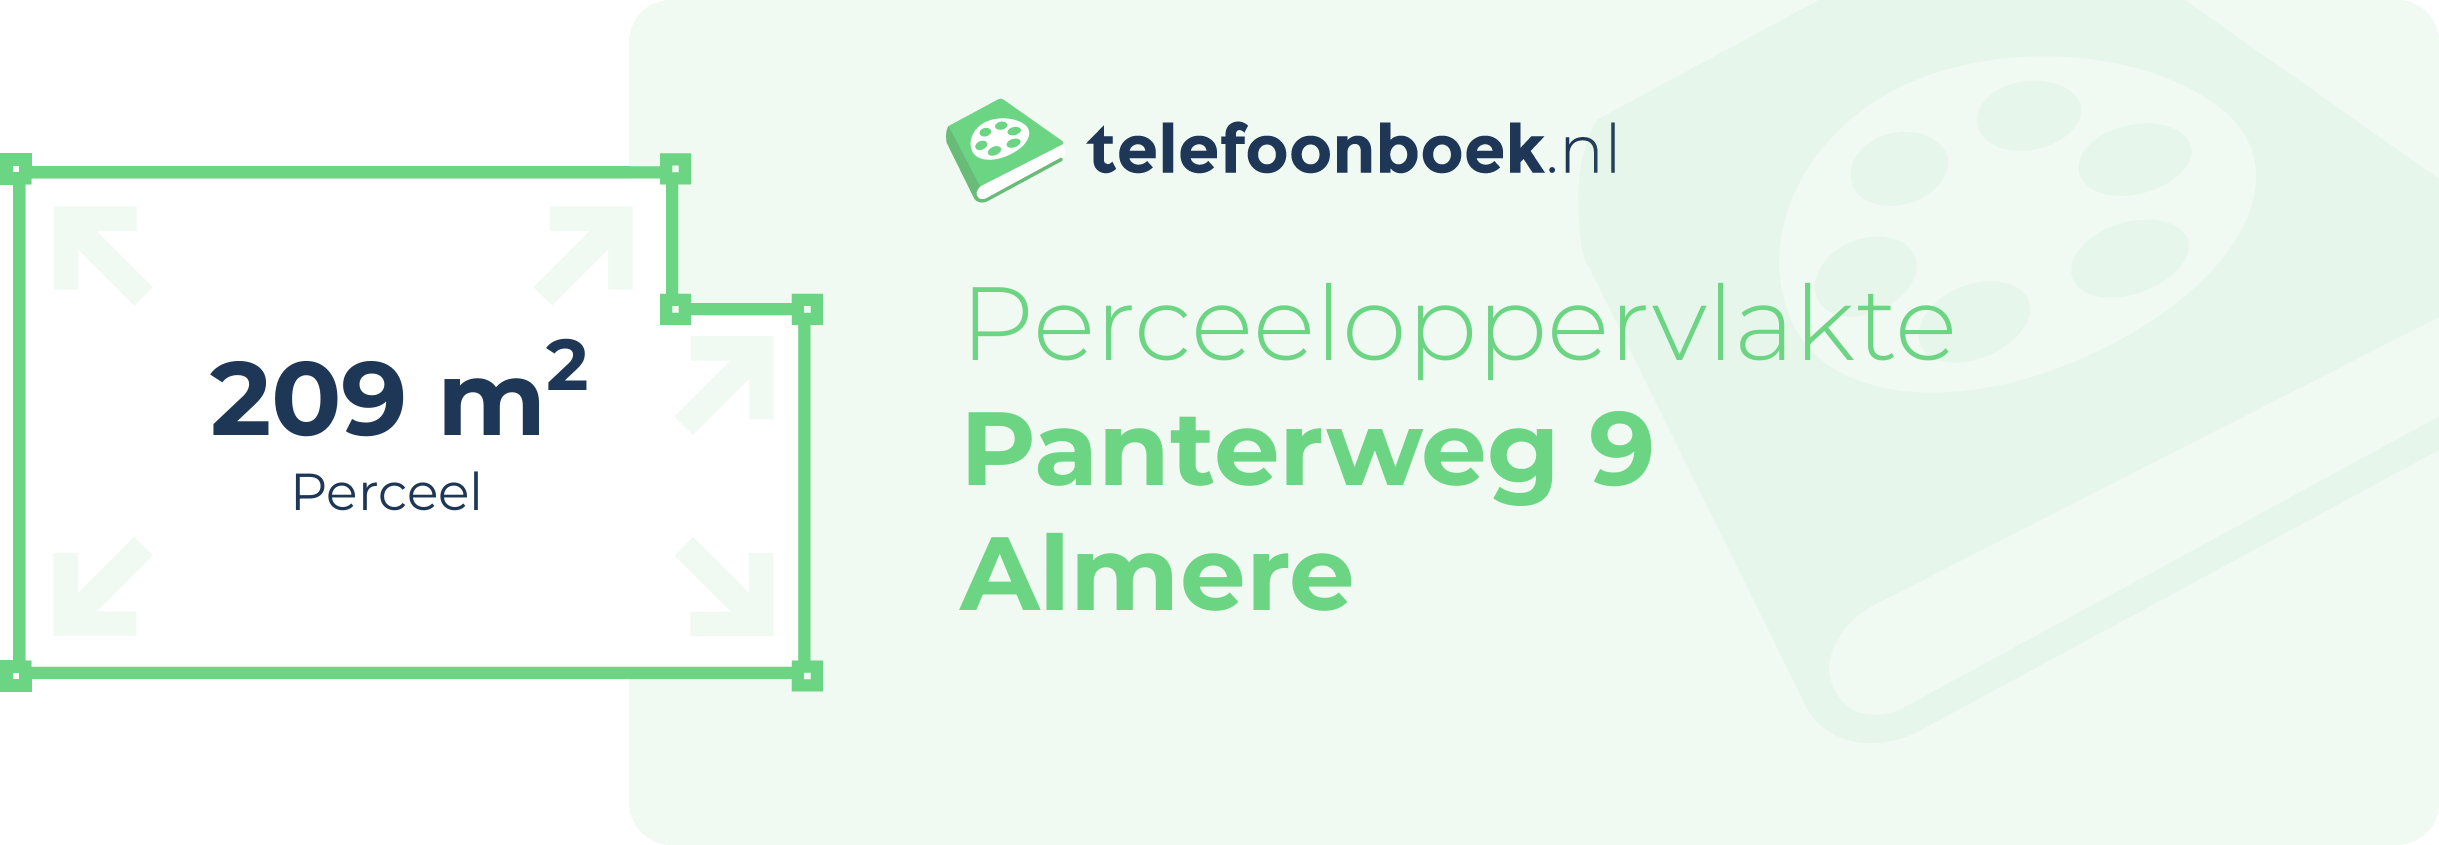 Perceeloppervlakte Panterweg 9 Almere